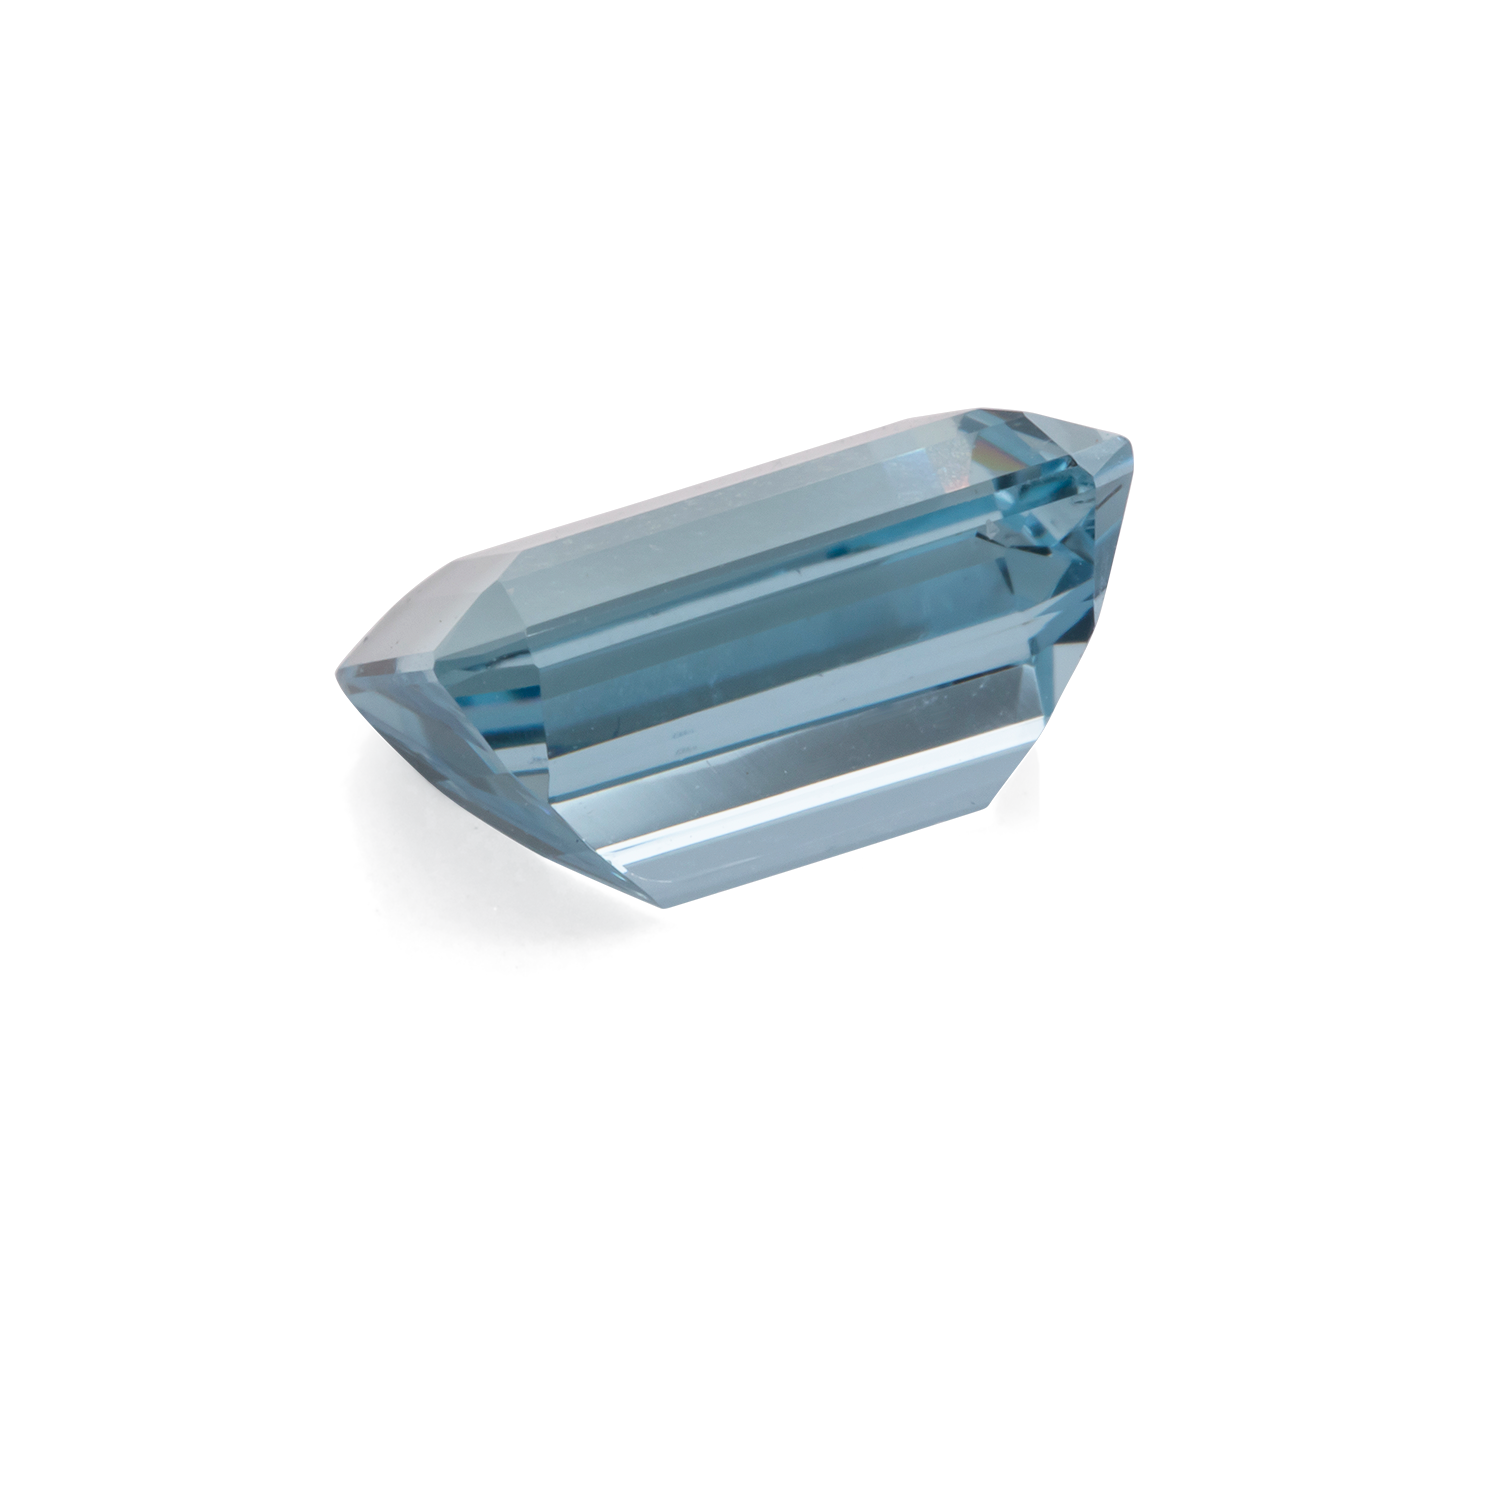 Aquamarin - A, achteck, 10x8 mm, 3,12 cts, Nr. A99007